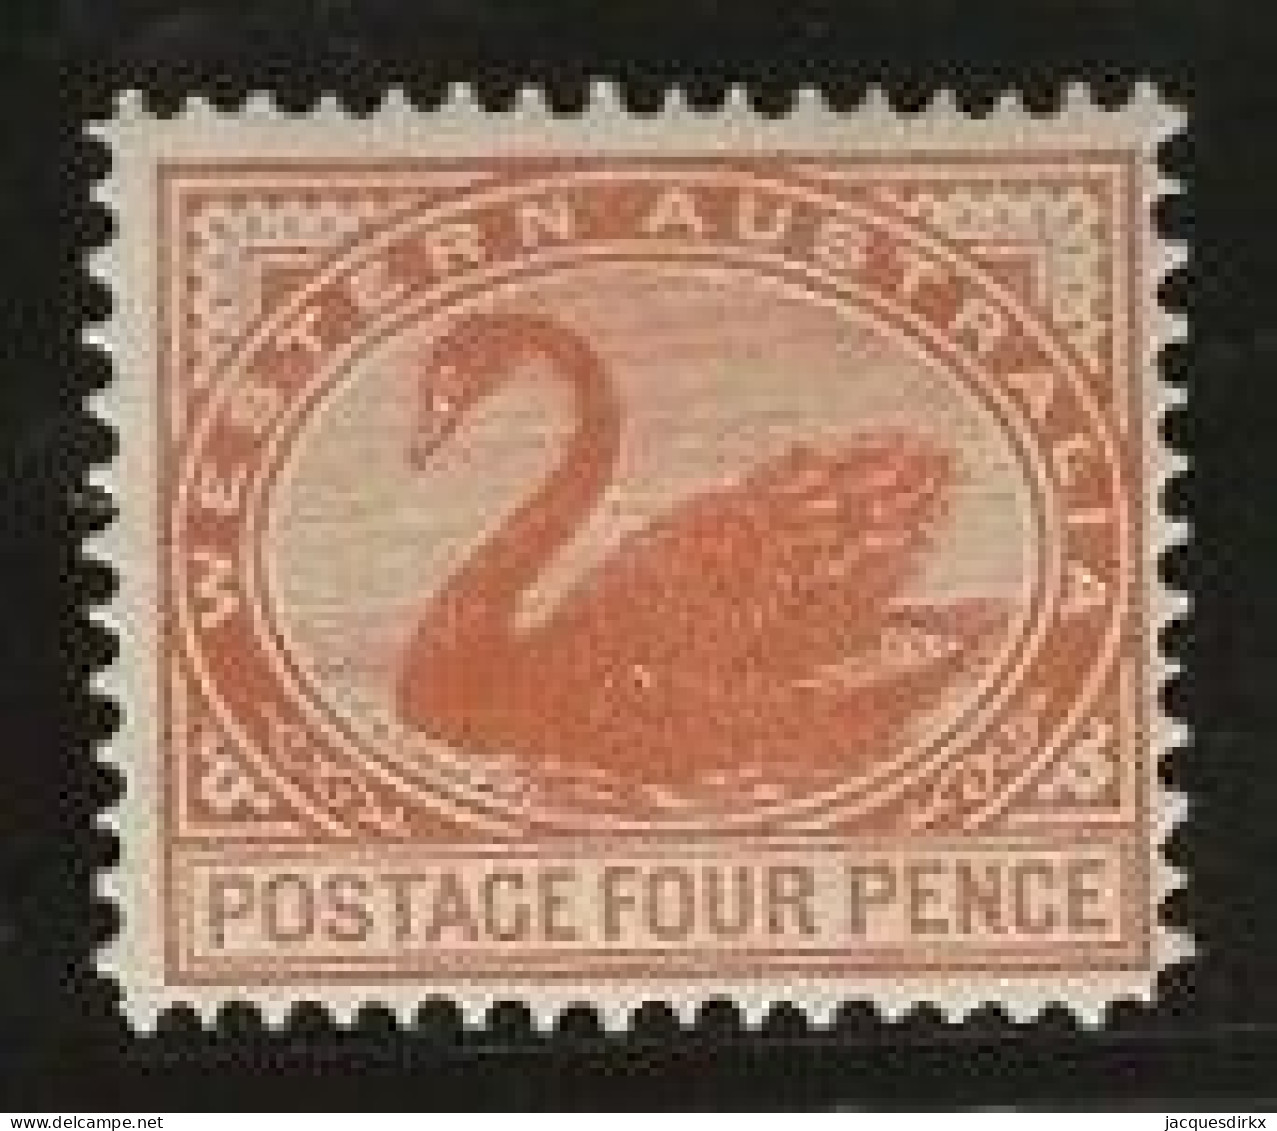 Western Australia     .   SG    .    142b       .   *       .     Mint-hinged - Mint Stamps